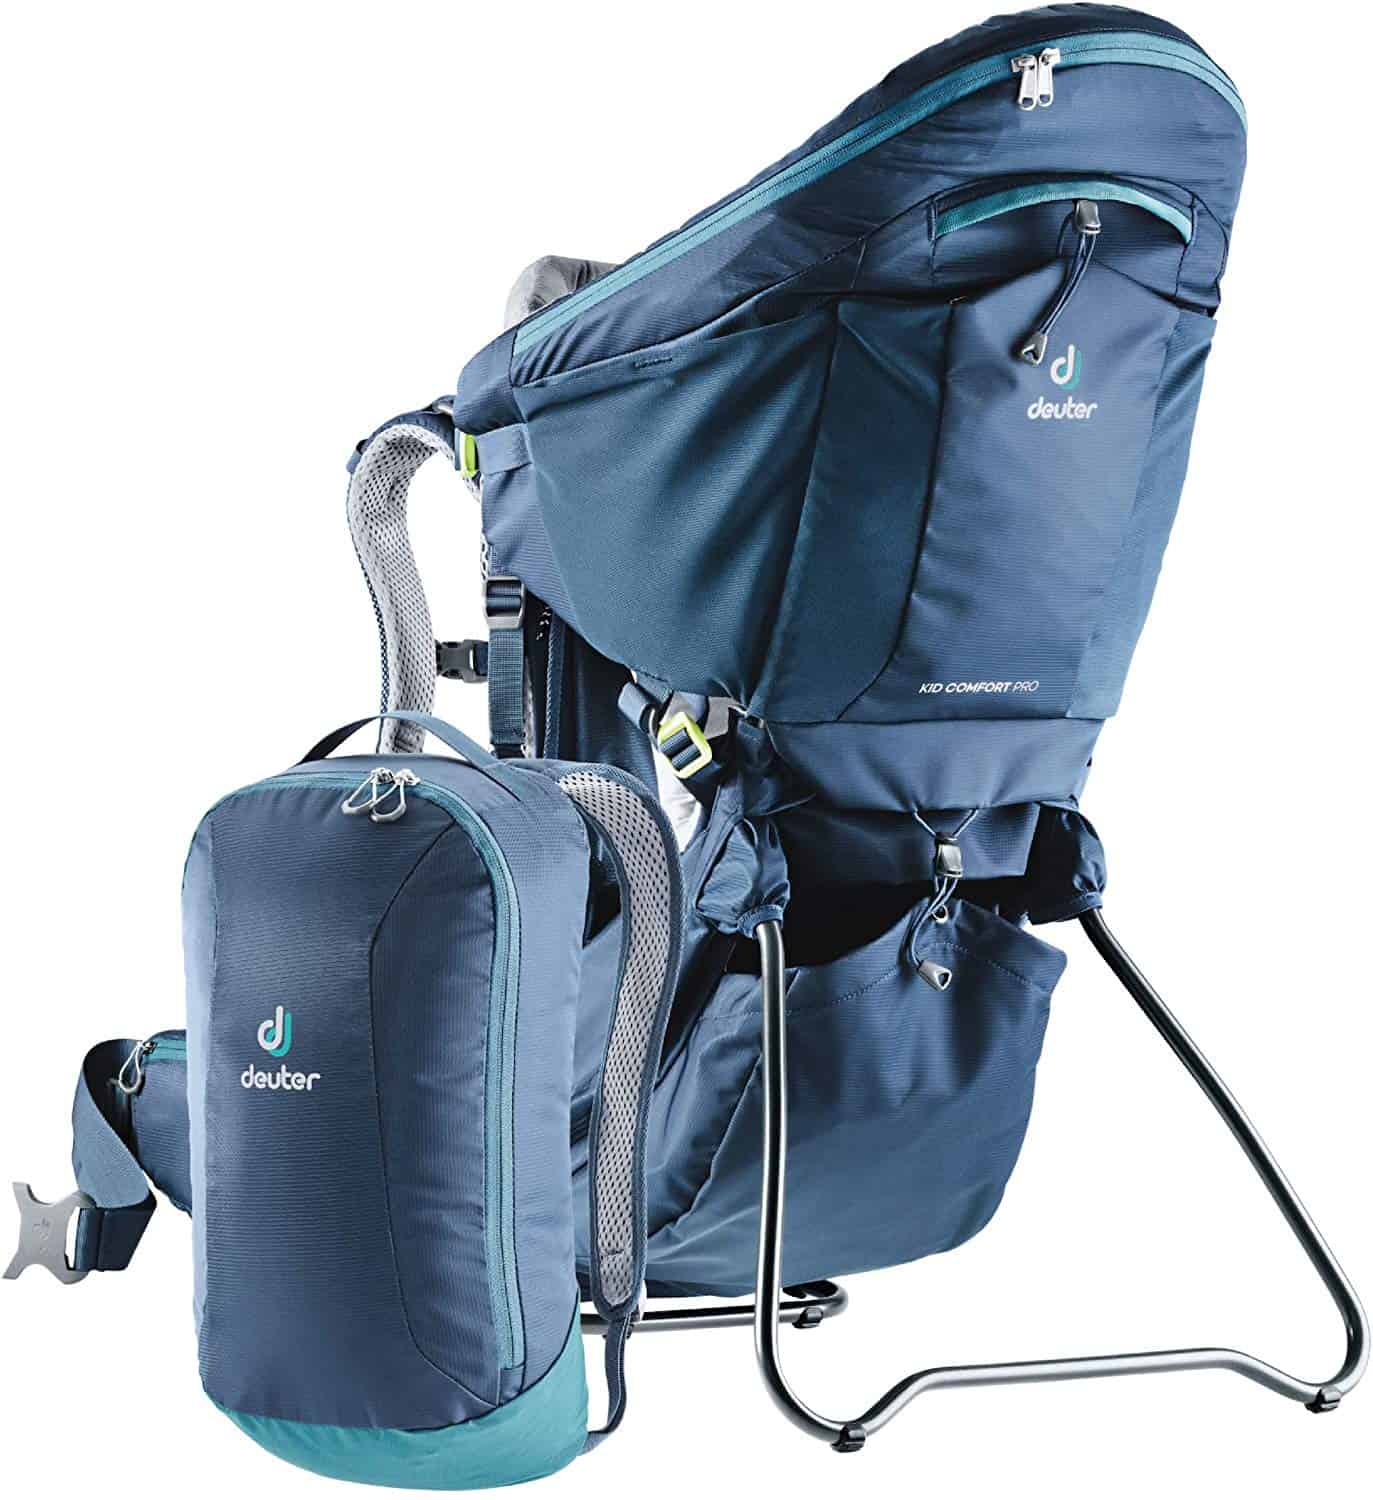 child carrier backpack ebay